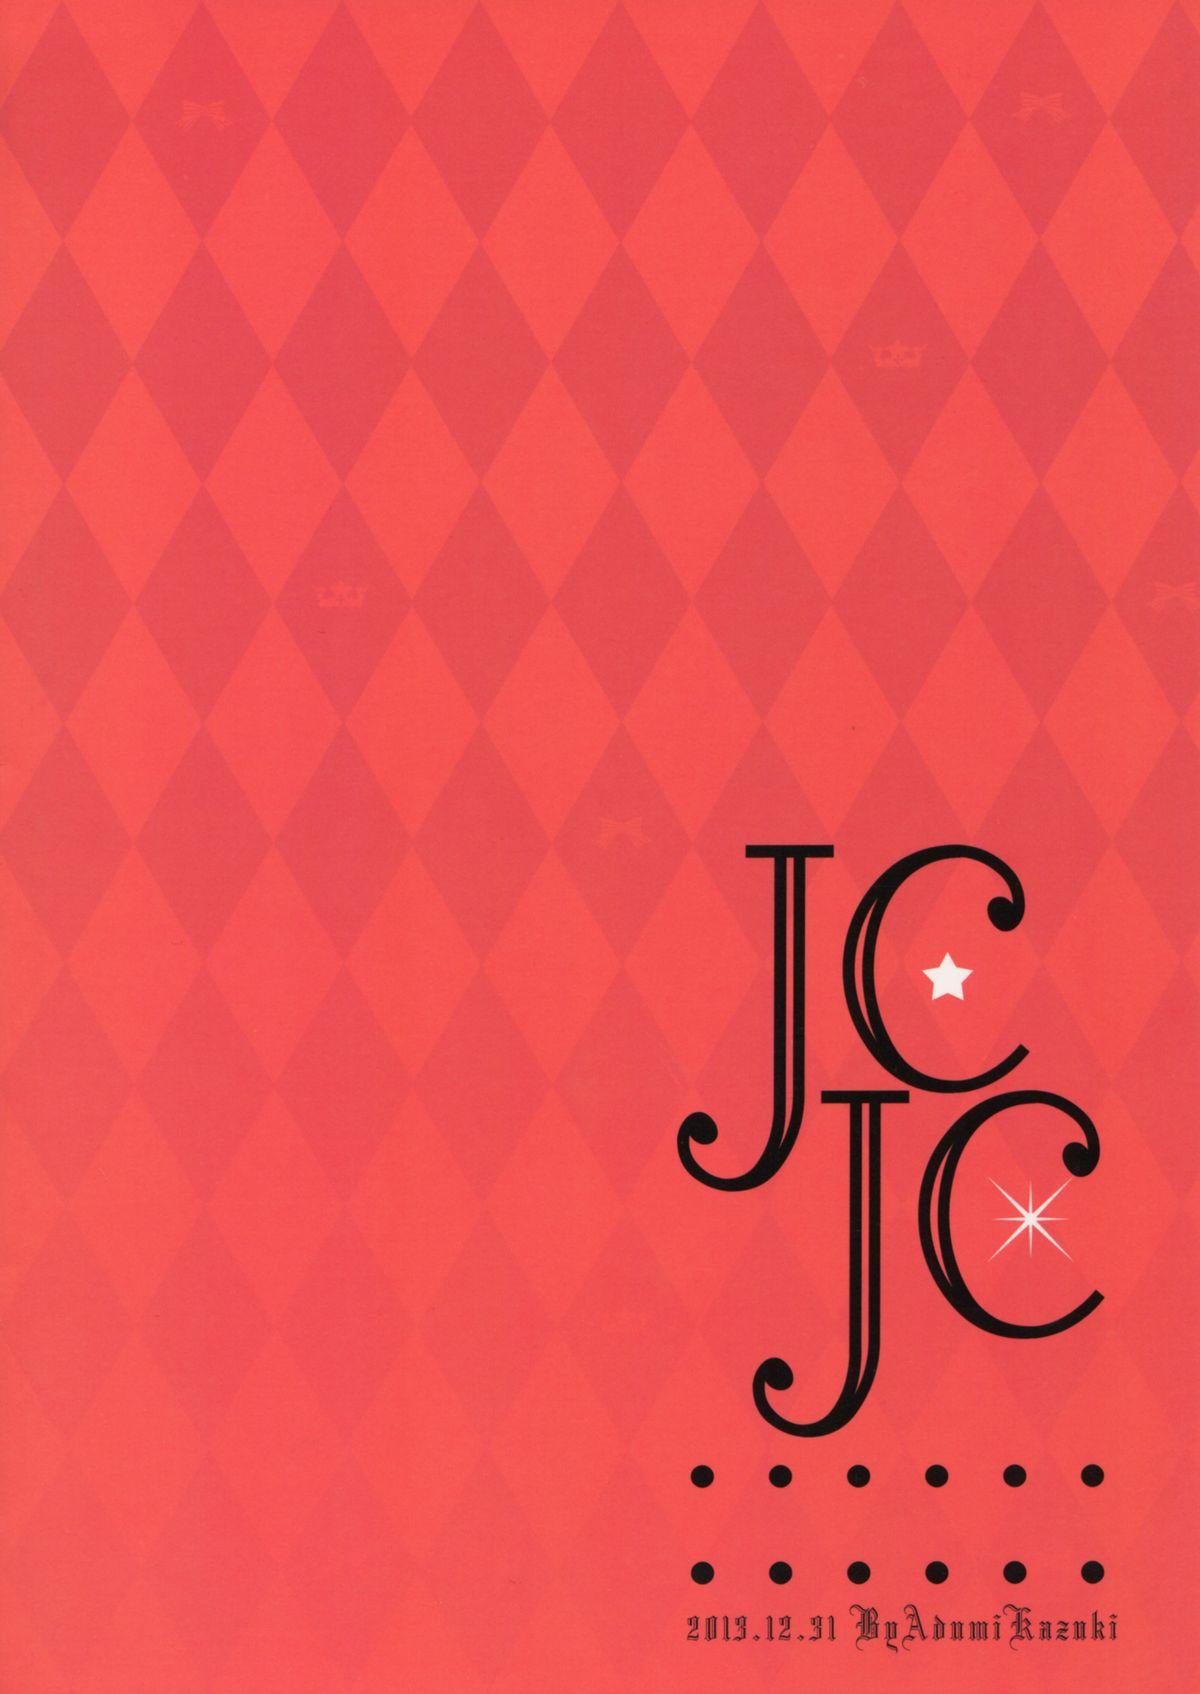 JCJC 13